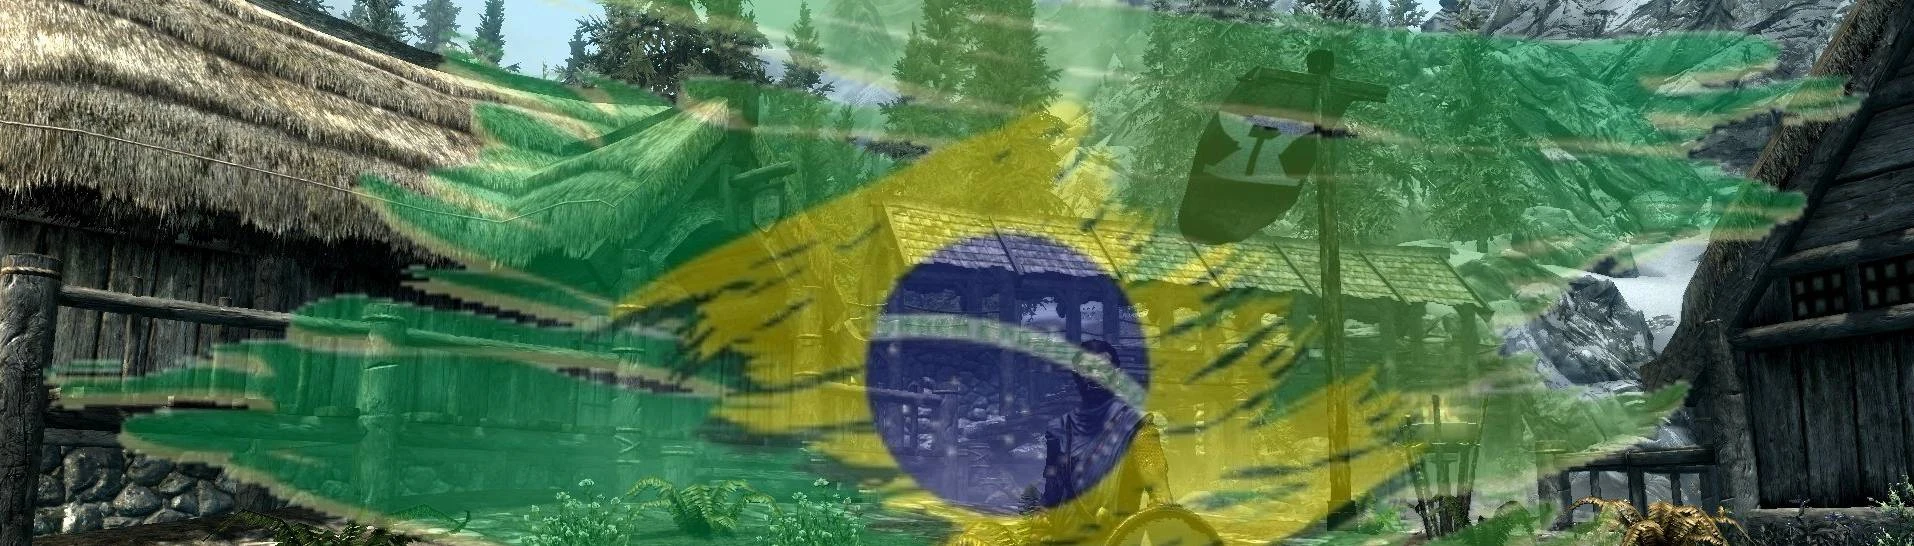 Workshop Steam::Brasil - Supremacia